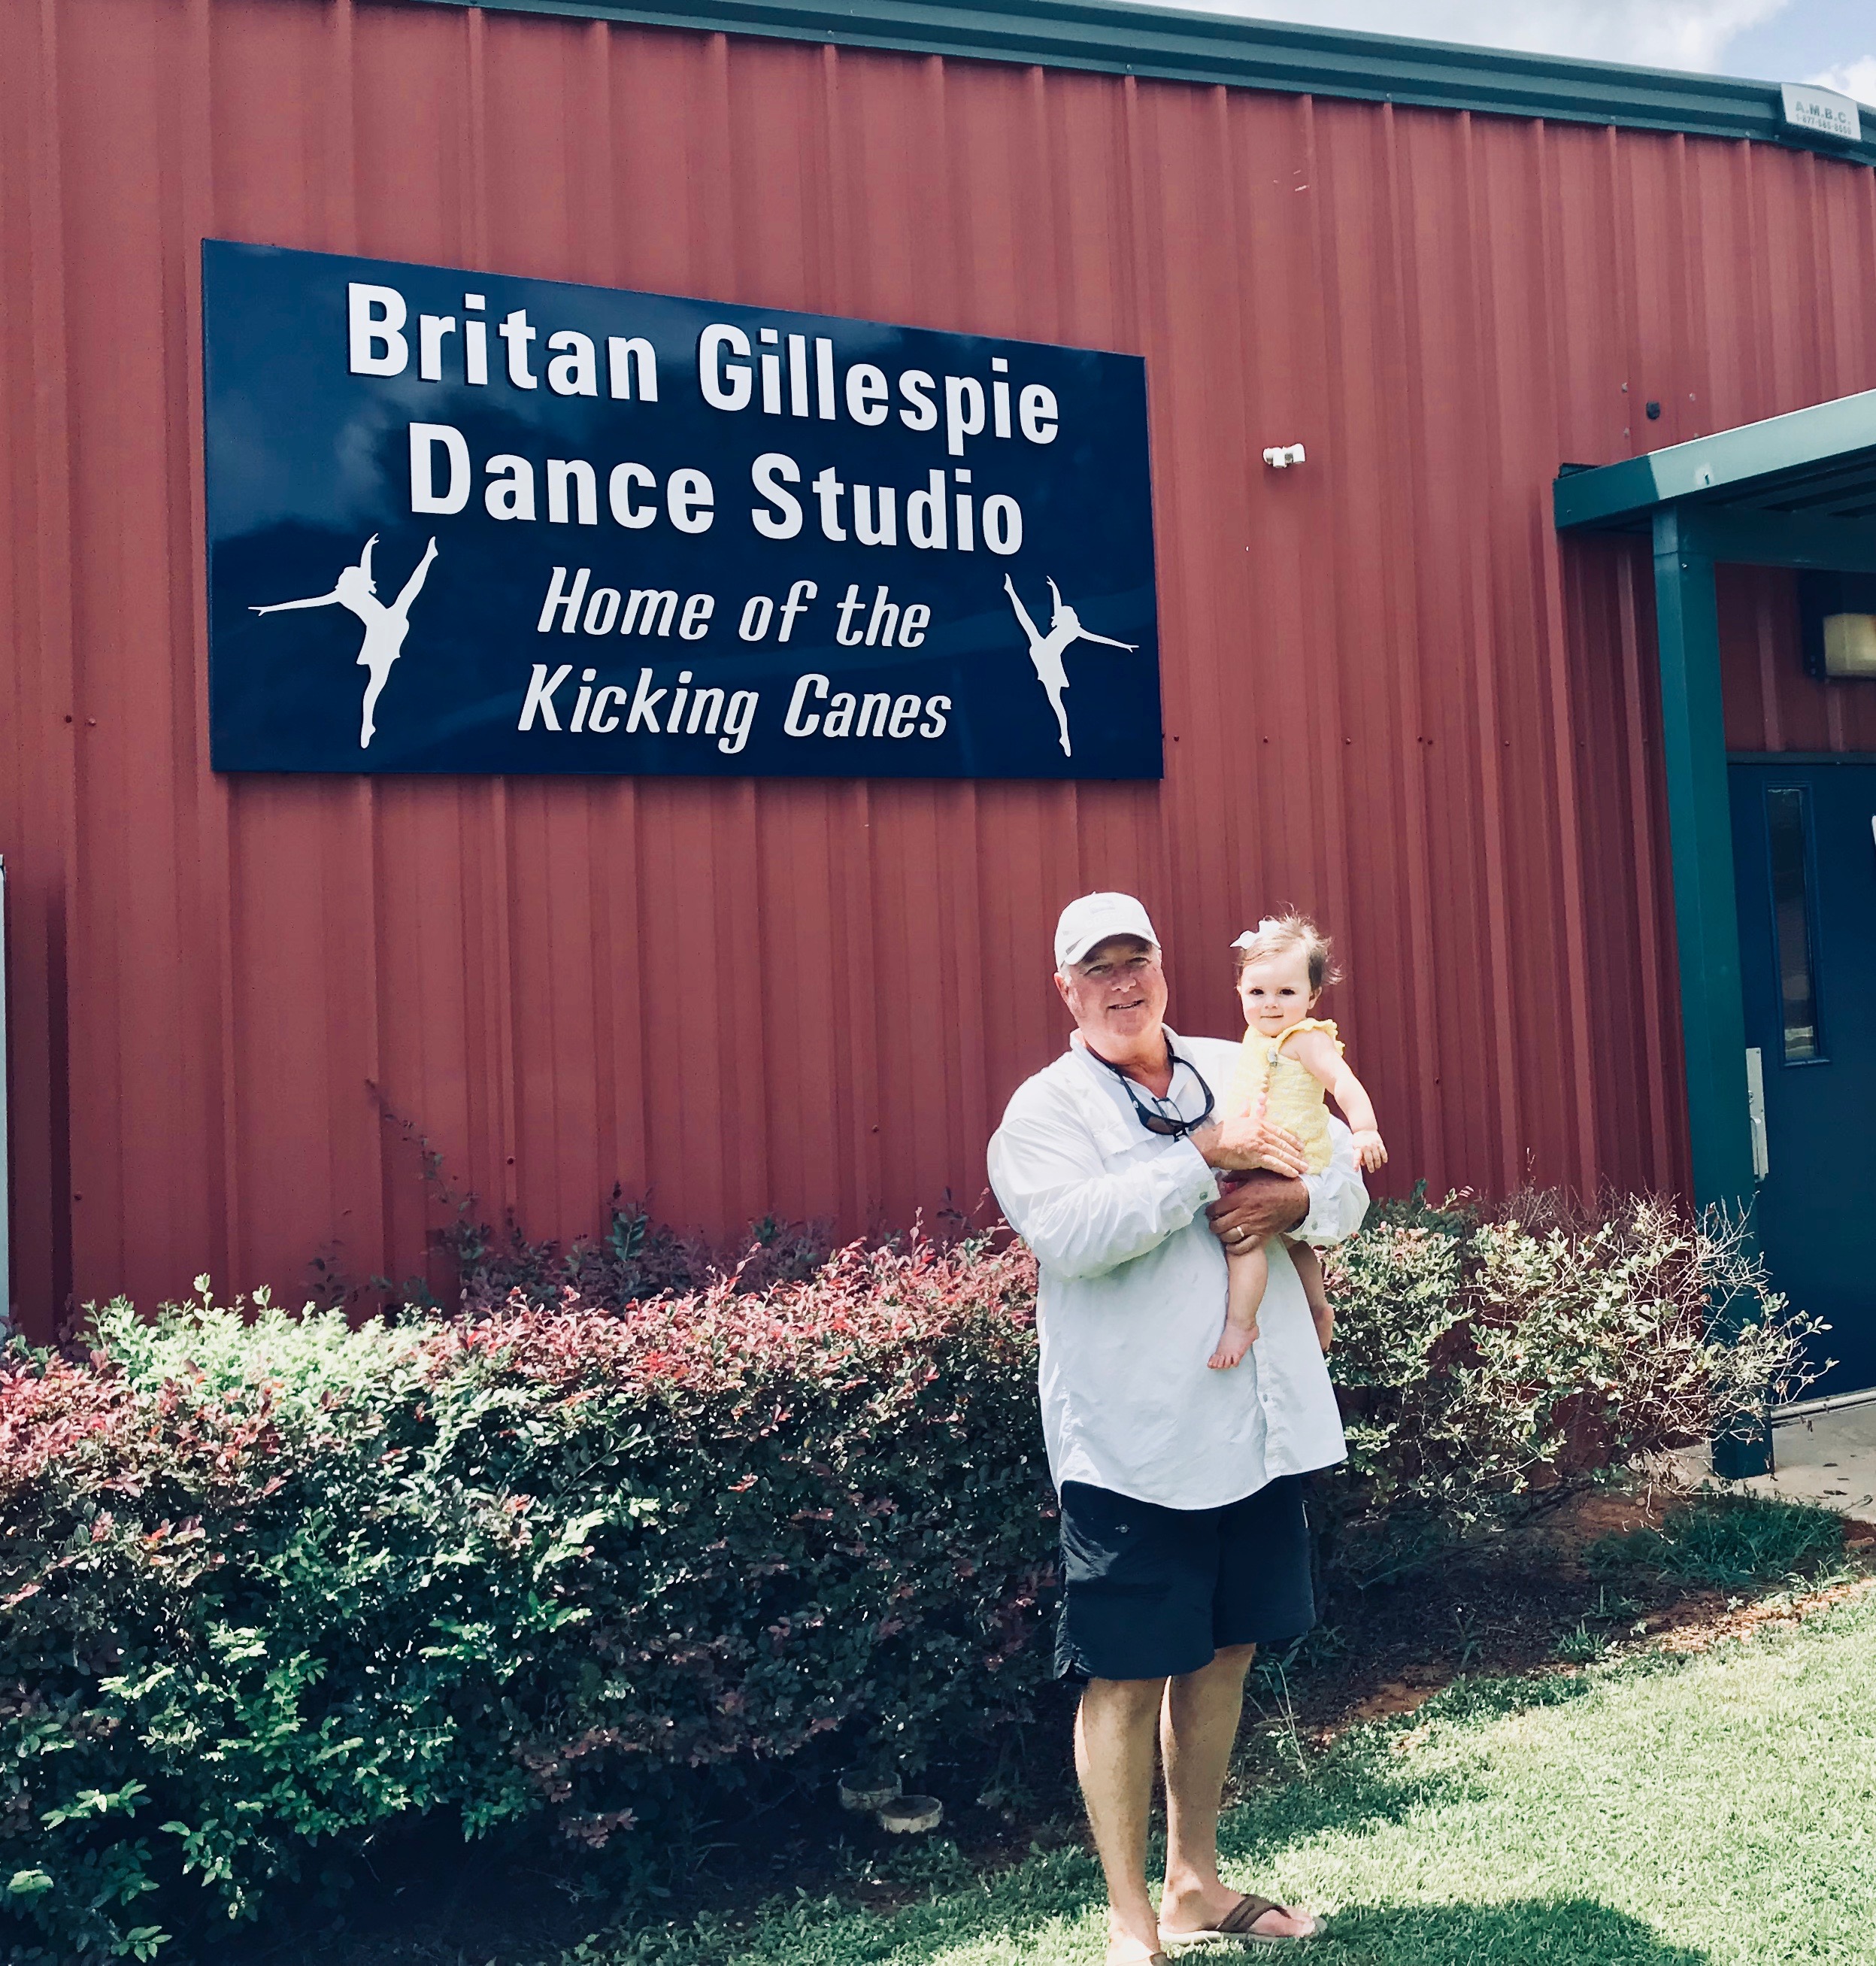 The Britan Gillespie Dance Studio